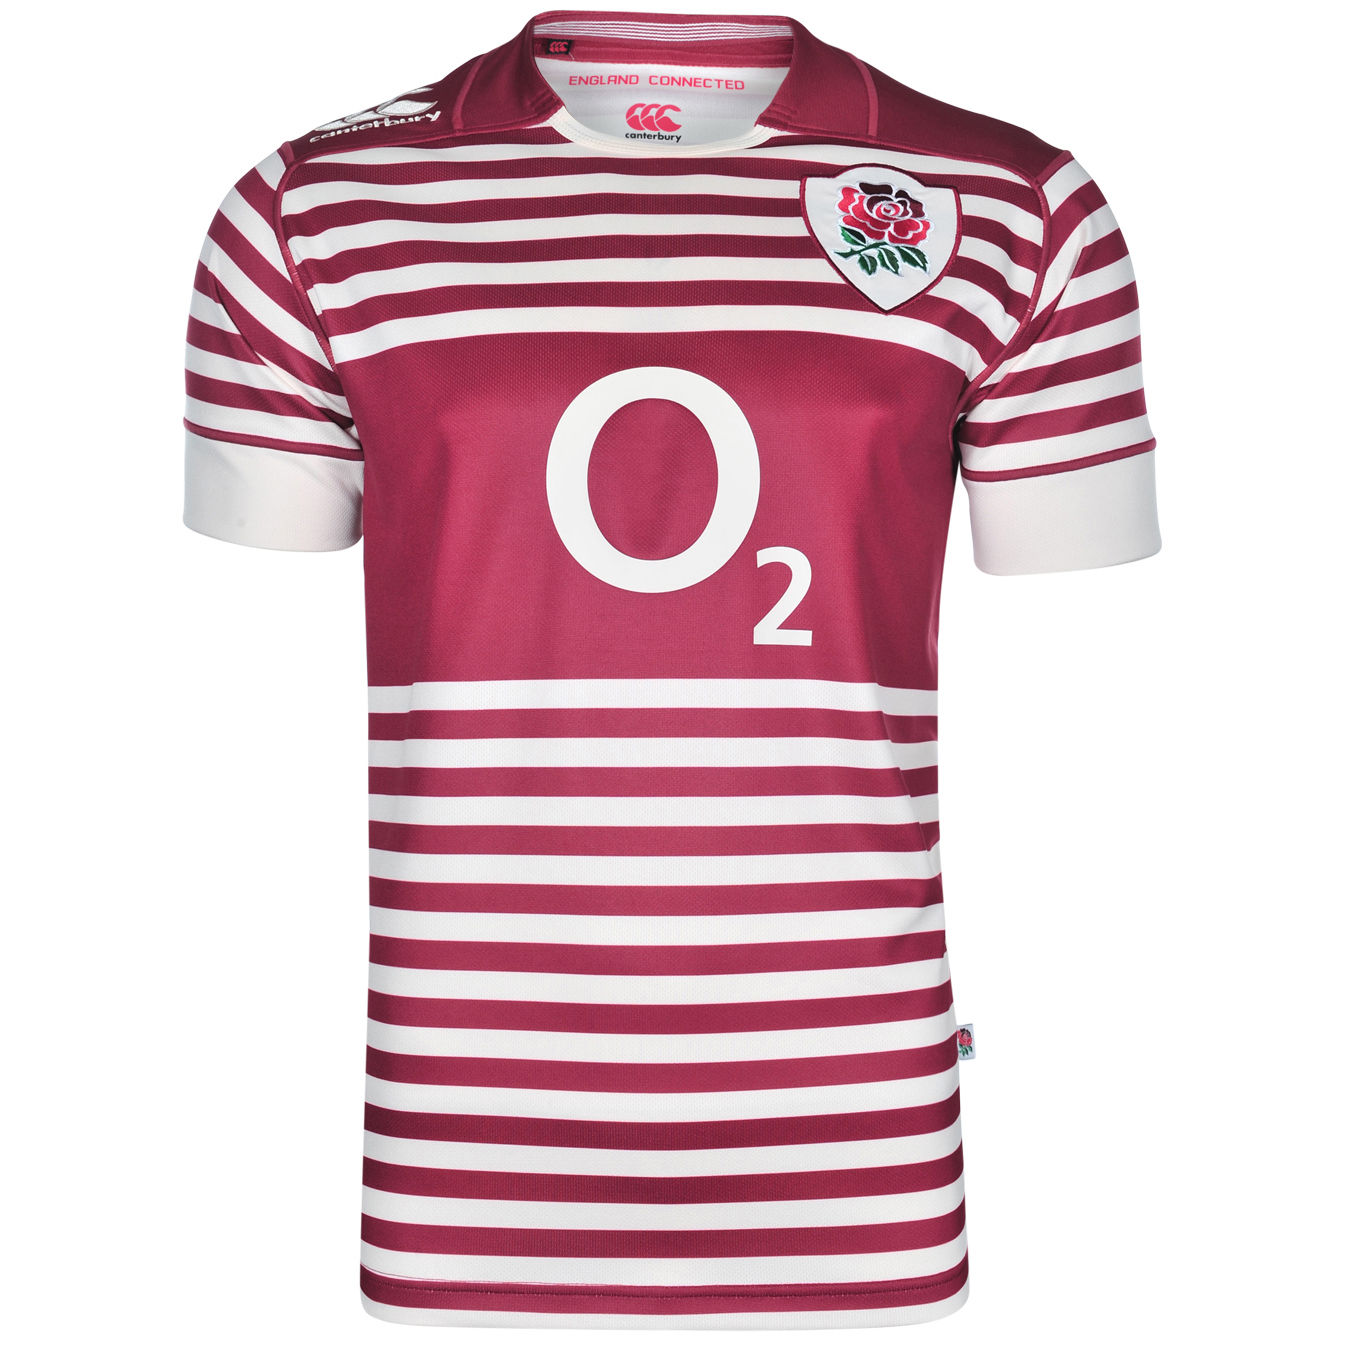 England Alternate Rugby Pro Shirt 2013/14